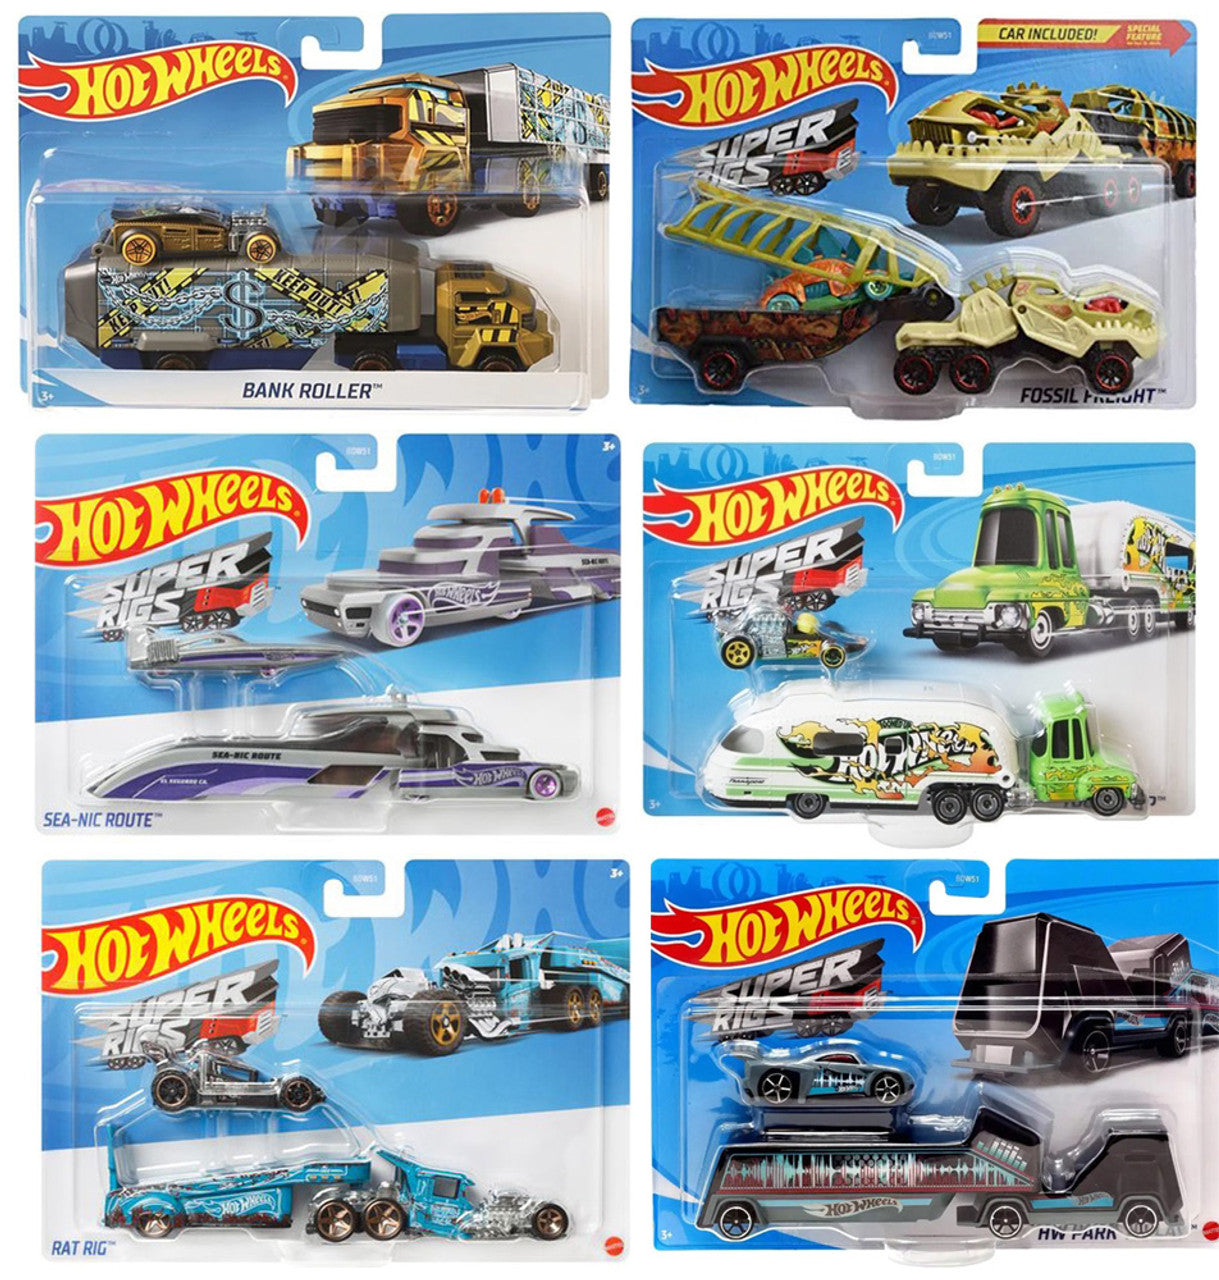 Mattel-Hot Wheels Super Rigs-HDT08-Legacy Toys